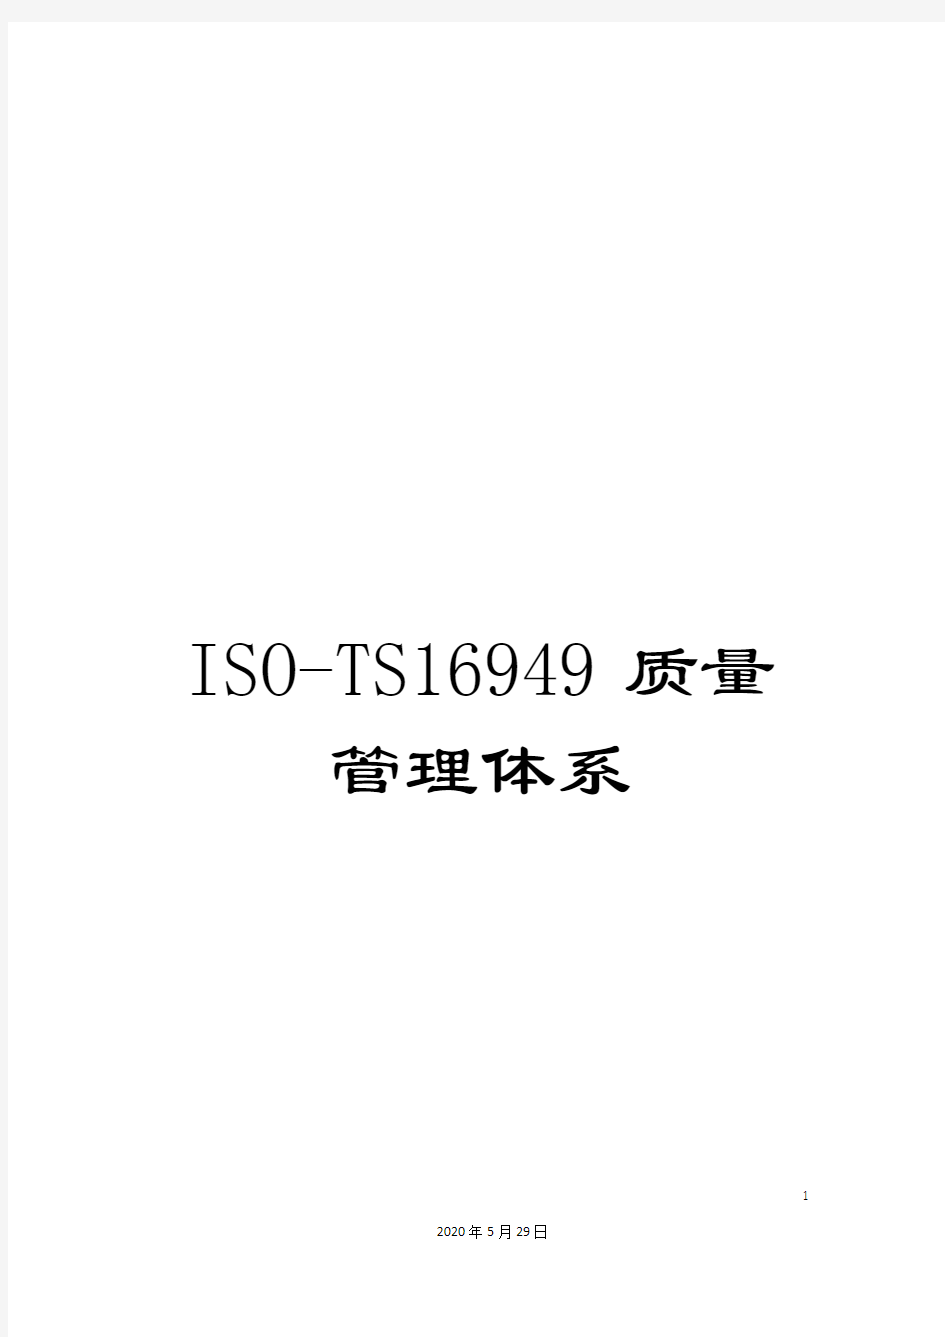 ISO-TS16949质量管理体系